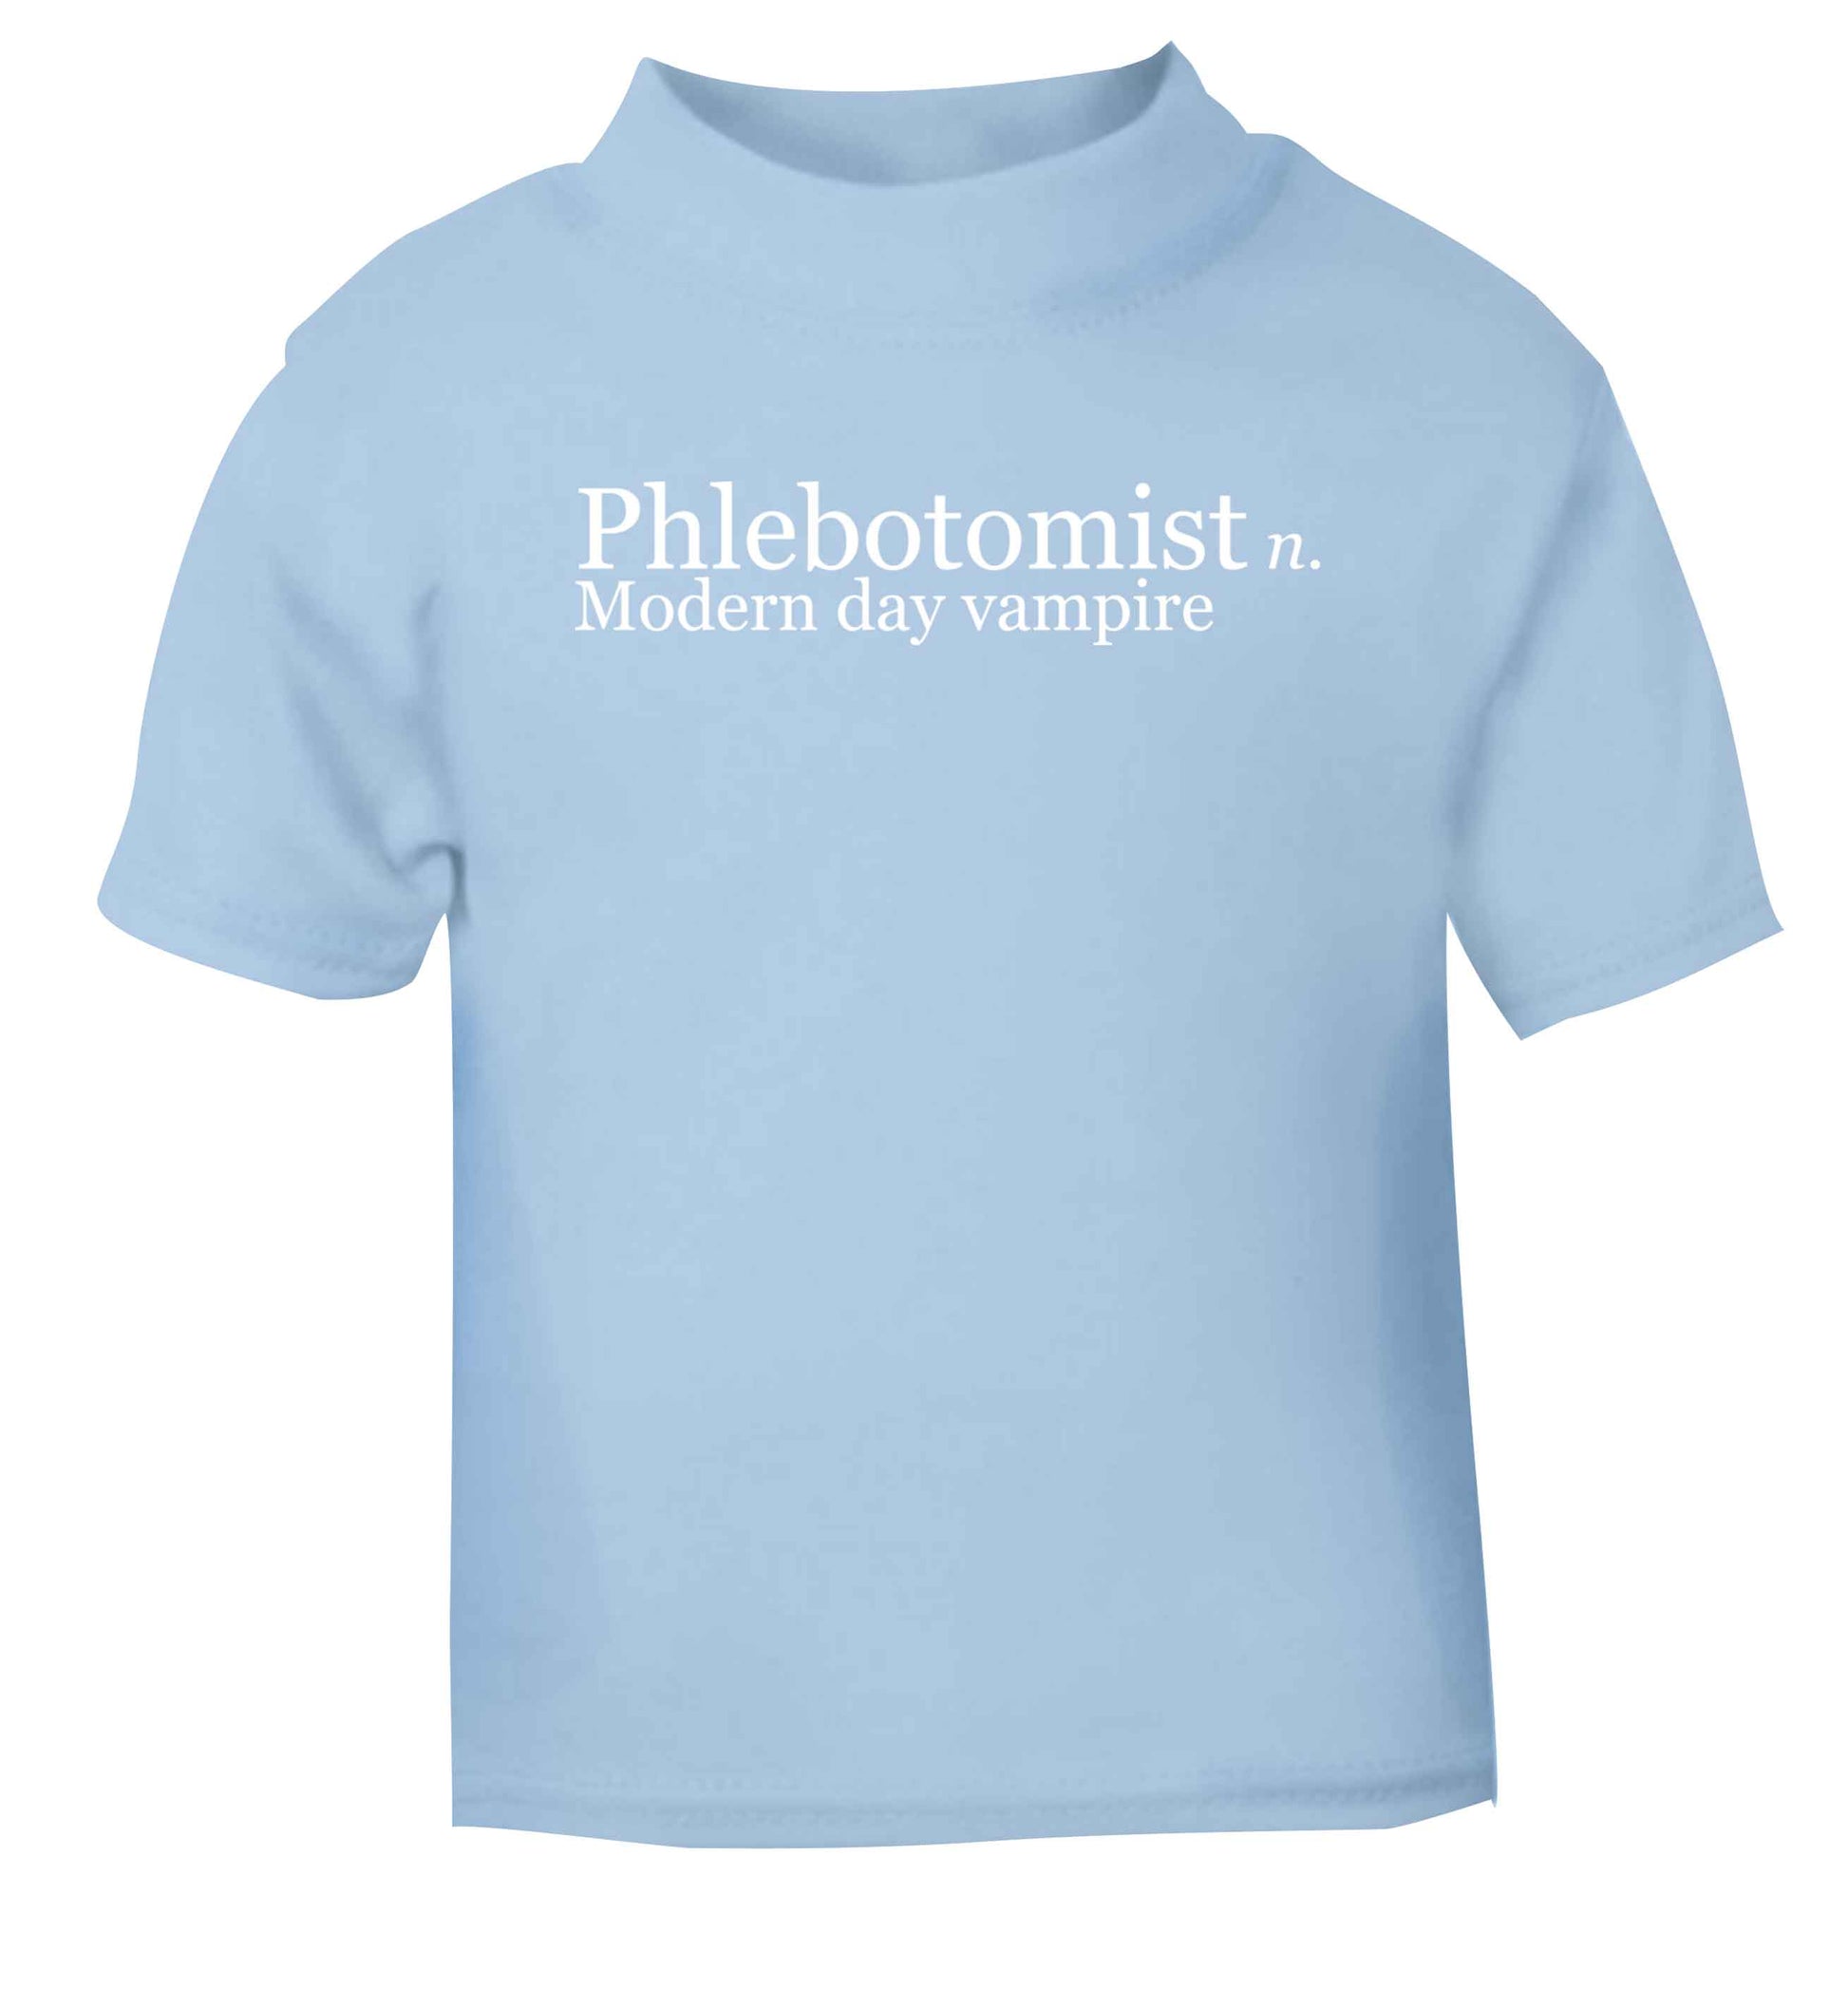 Phlebotomist - Modern day vampire light blue baby toddler Tshirt 2 Years